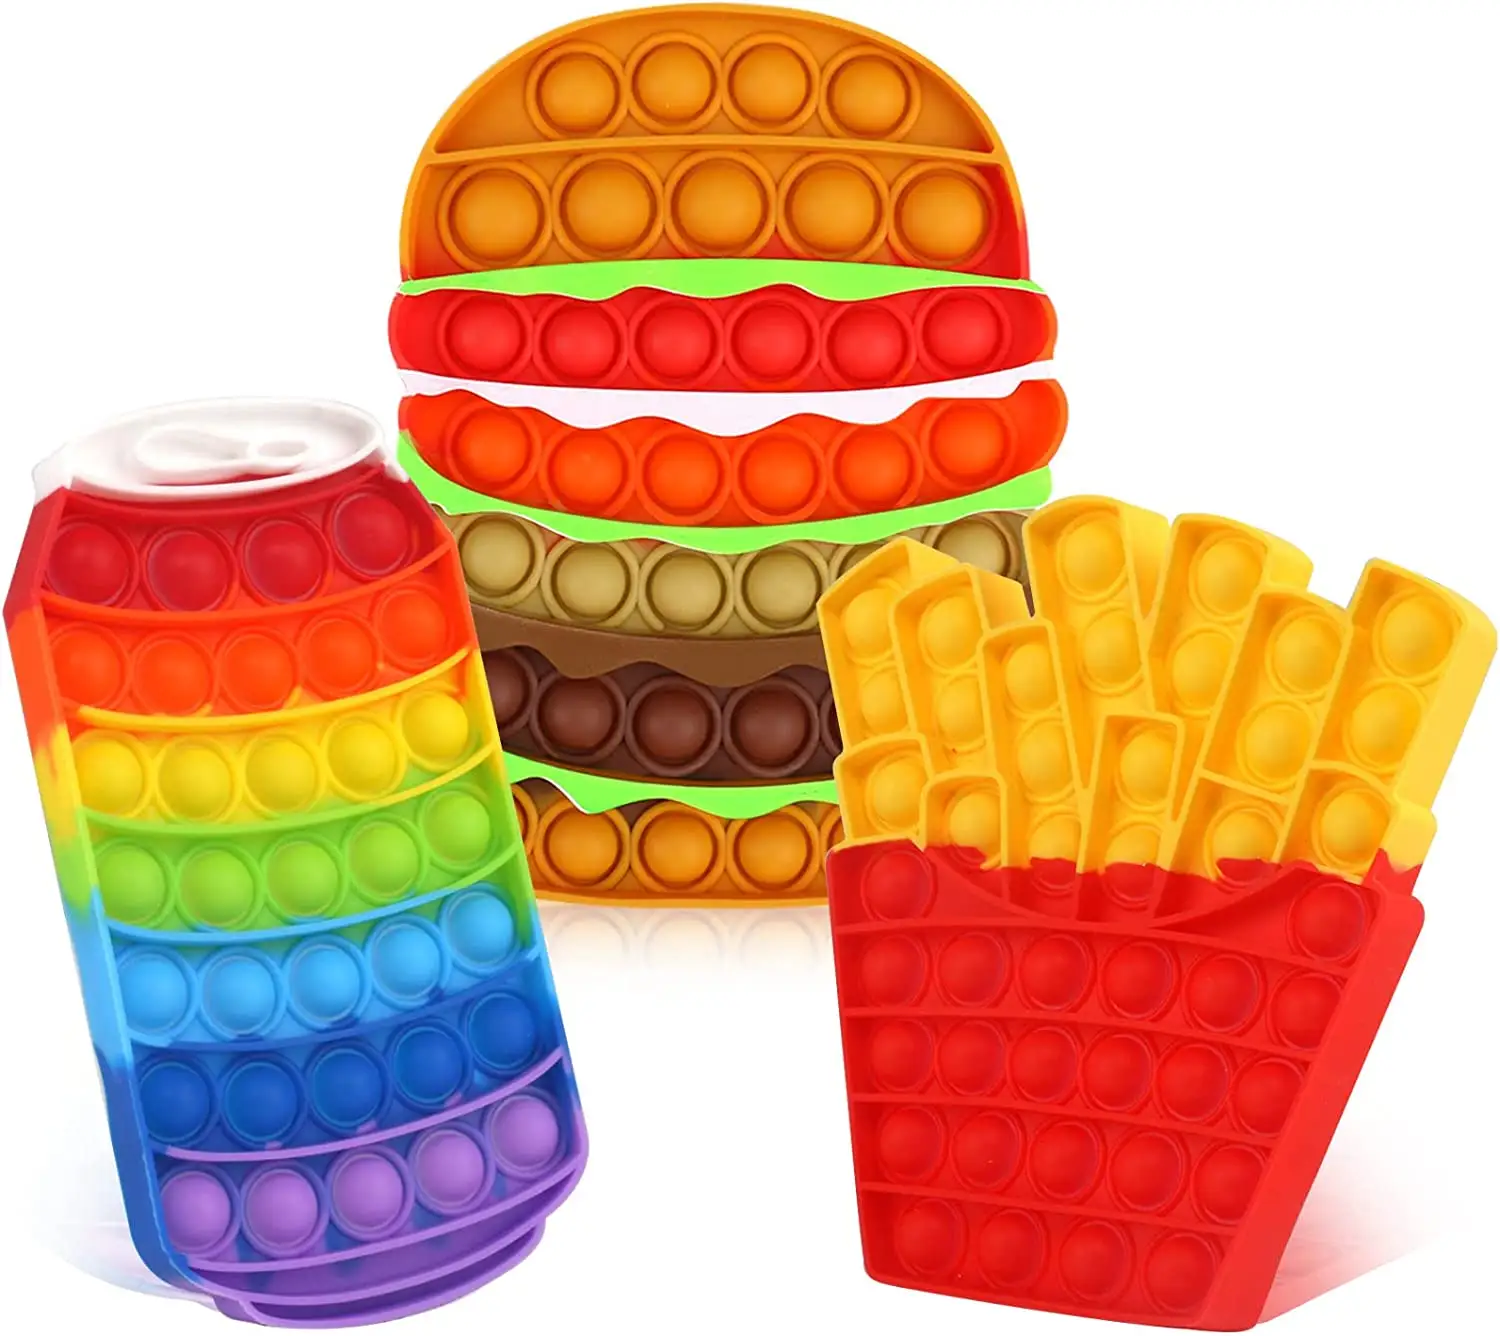 New Bulk Custom Silicone Push Pop Bubble Fidget Sensory Toy Stress Relief For Kids Adult